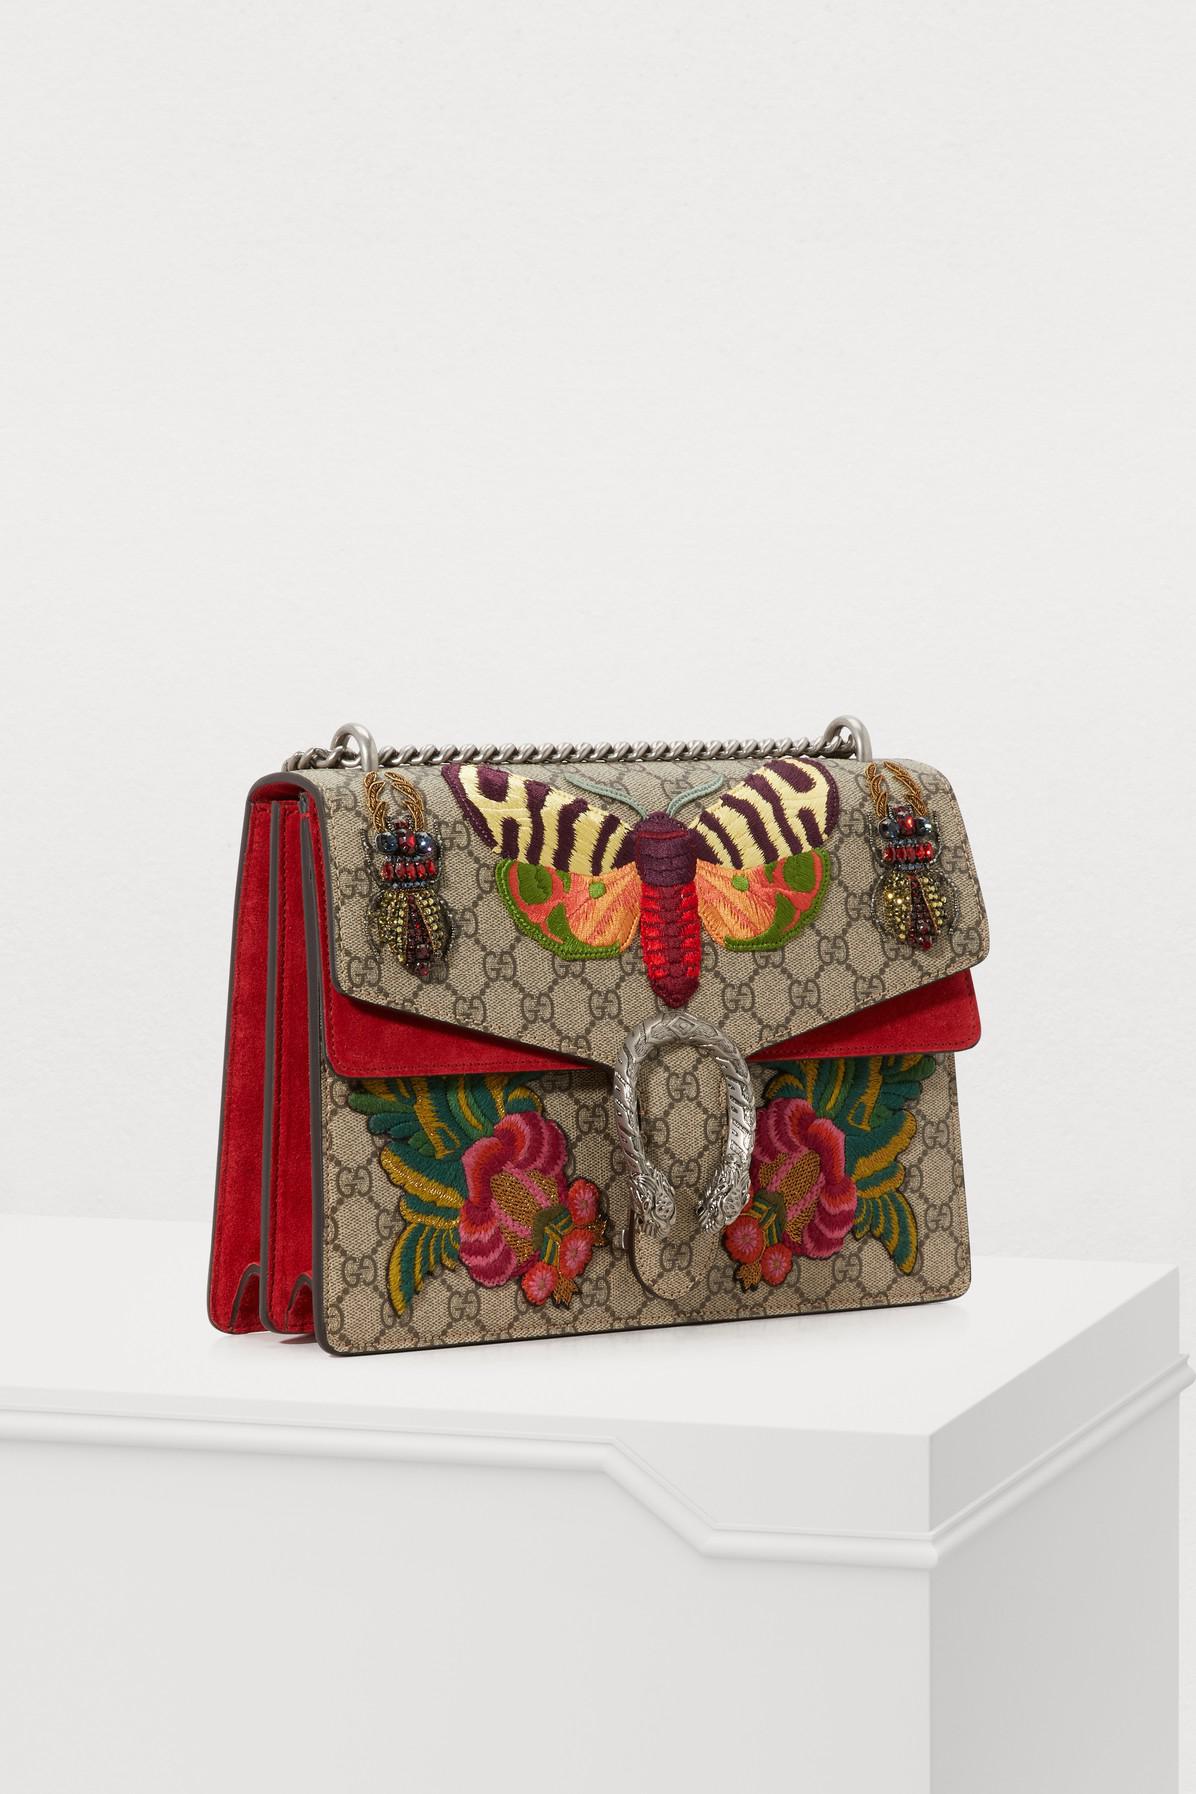 Gucci Canvas Dionysus Medium Shoulder Bag in Red - Lyst